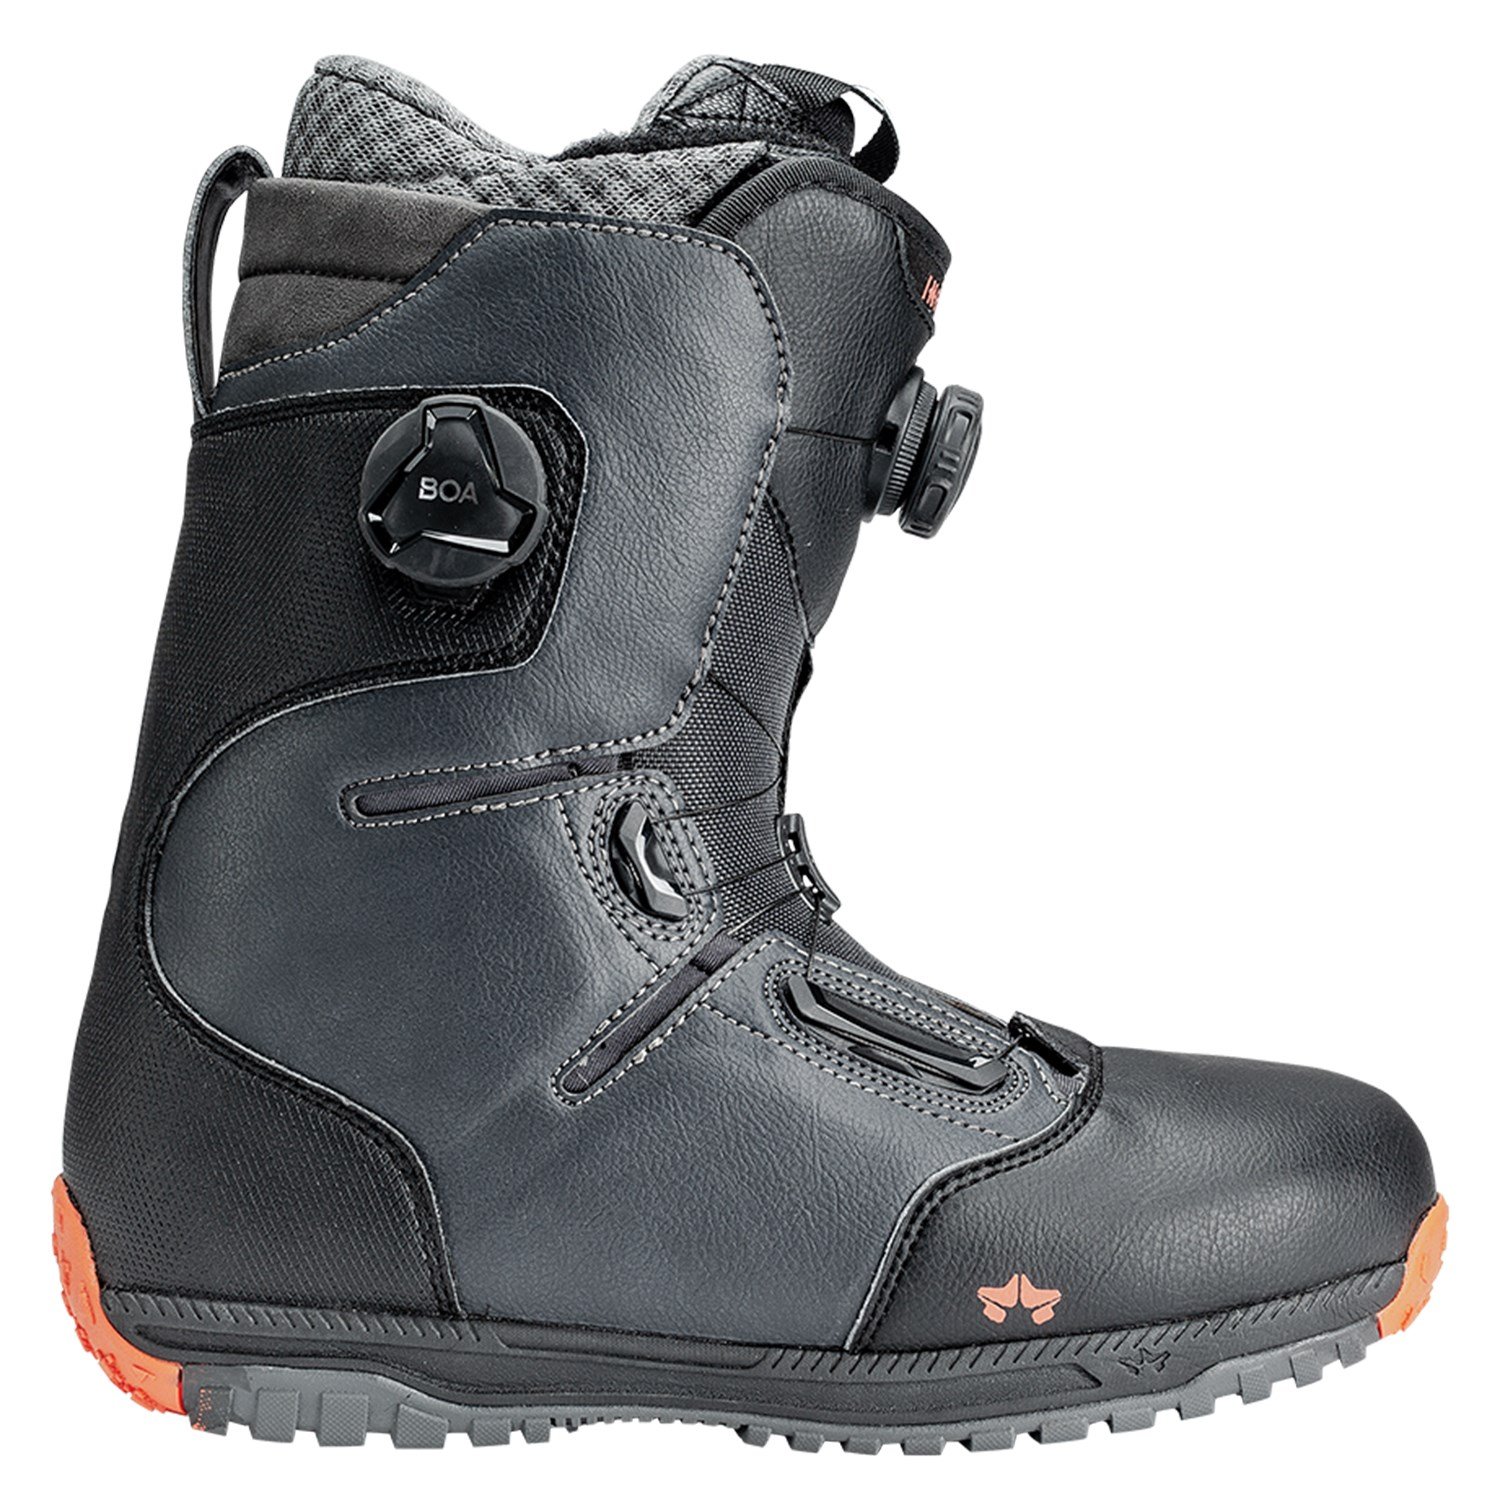 Rome Snowboards Inferno Sort Snowboard Boots, Black, 12並行輸入